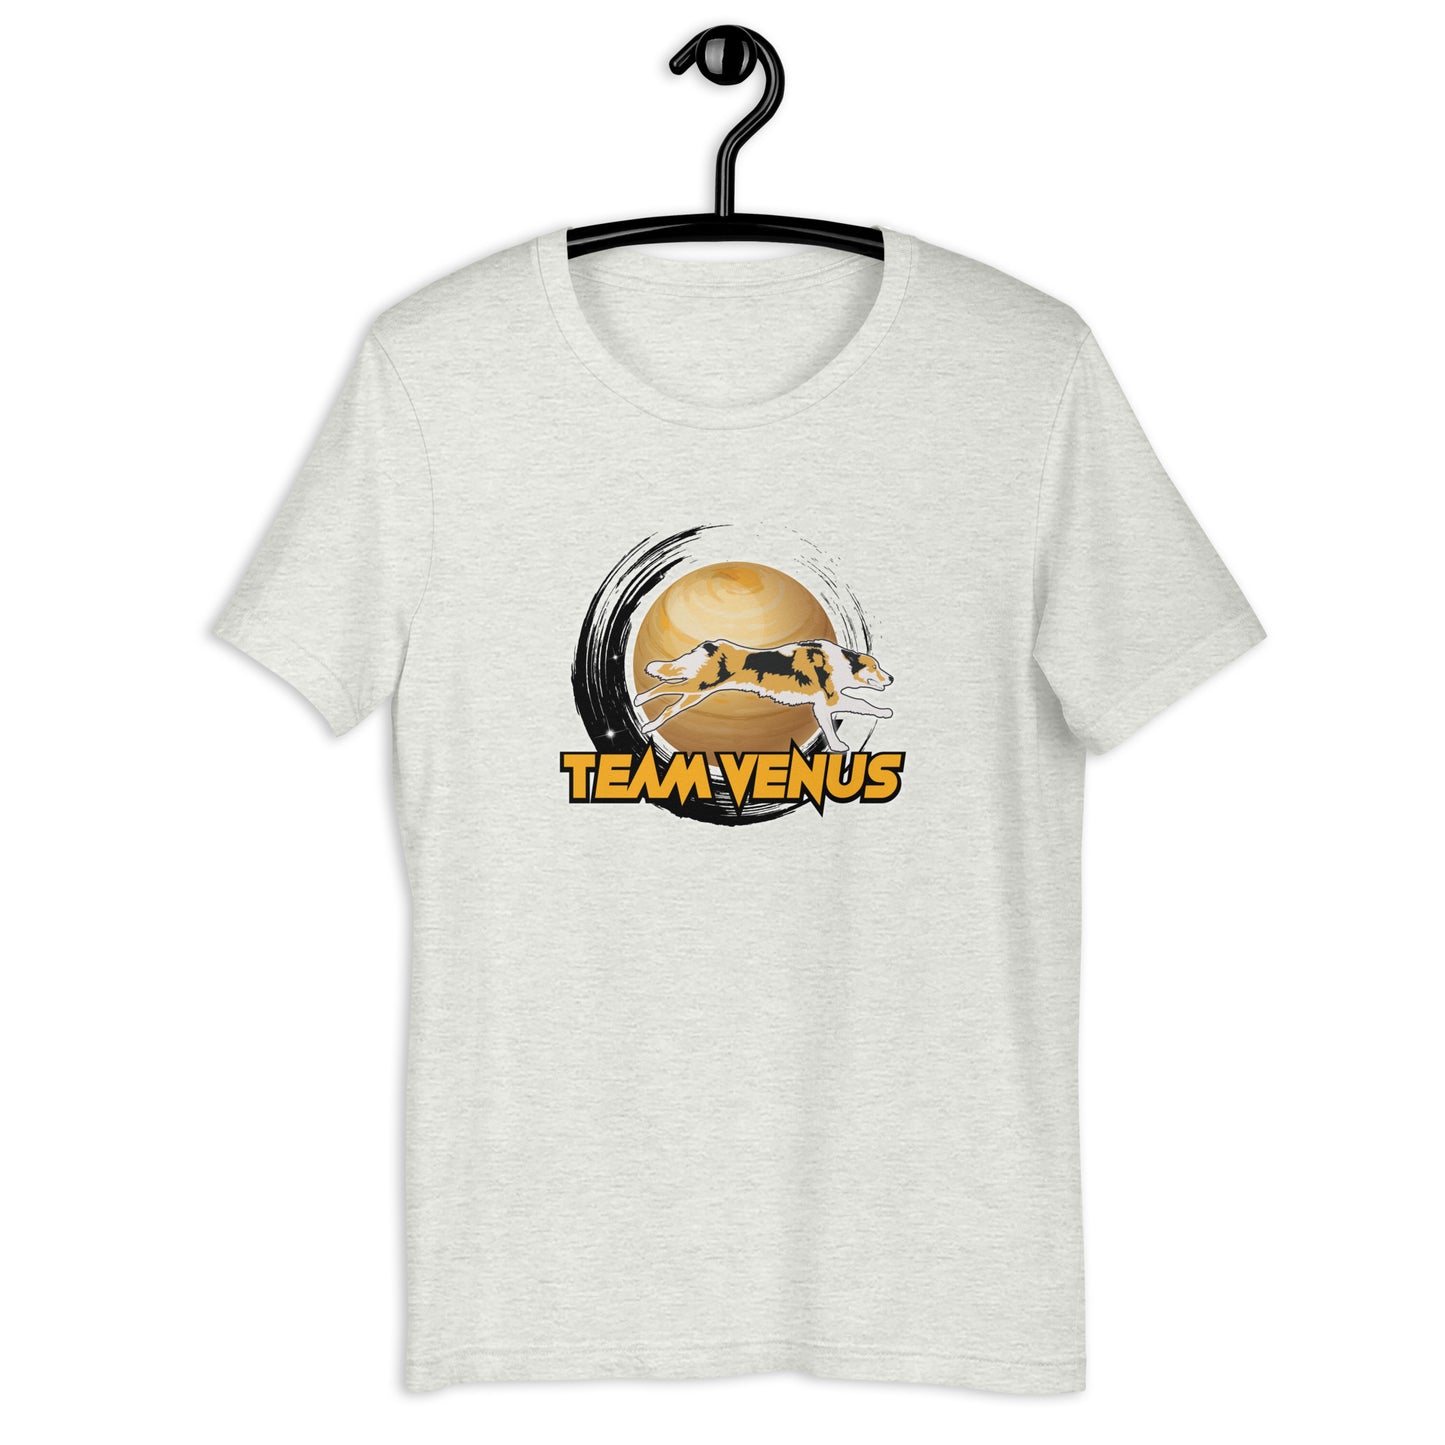 TEAM VENUS - CUSTOM - Unisex t-shirt